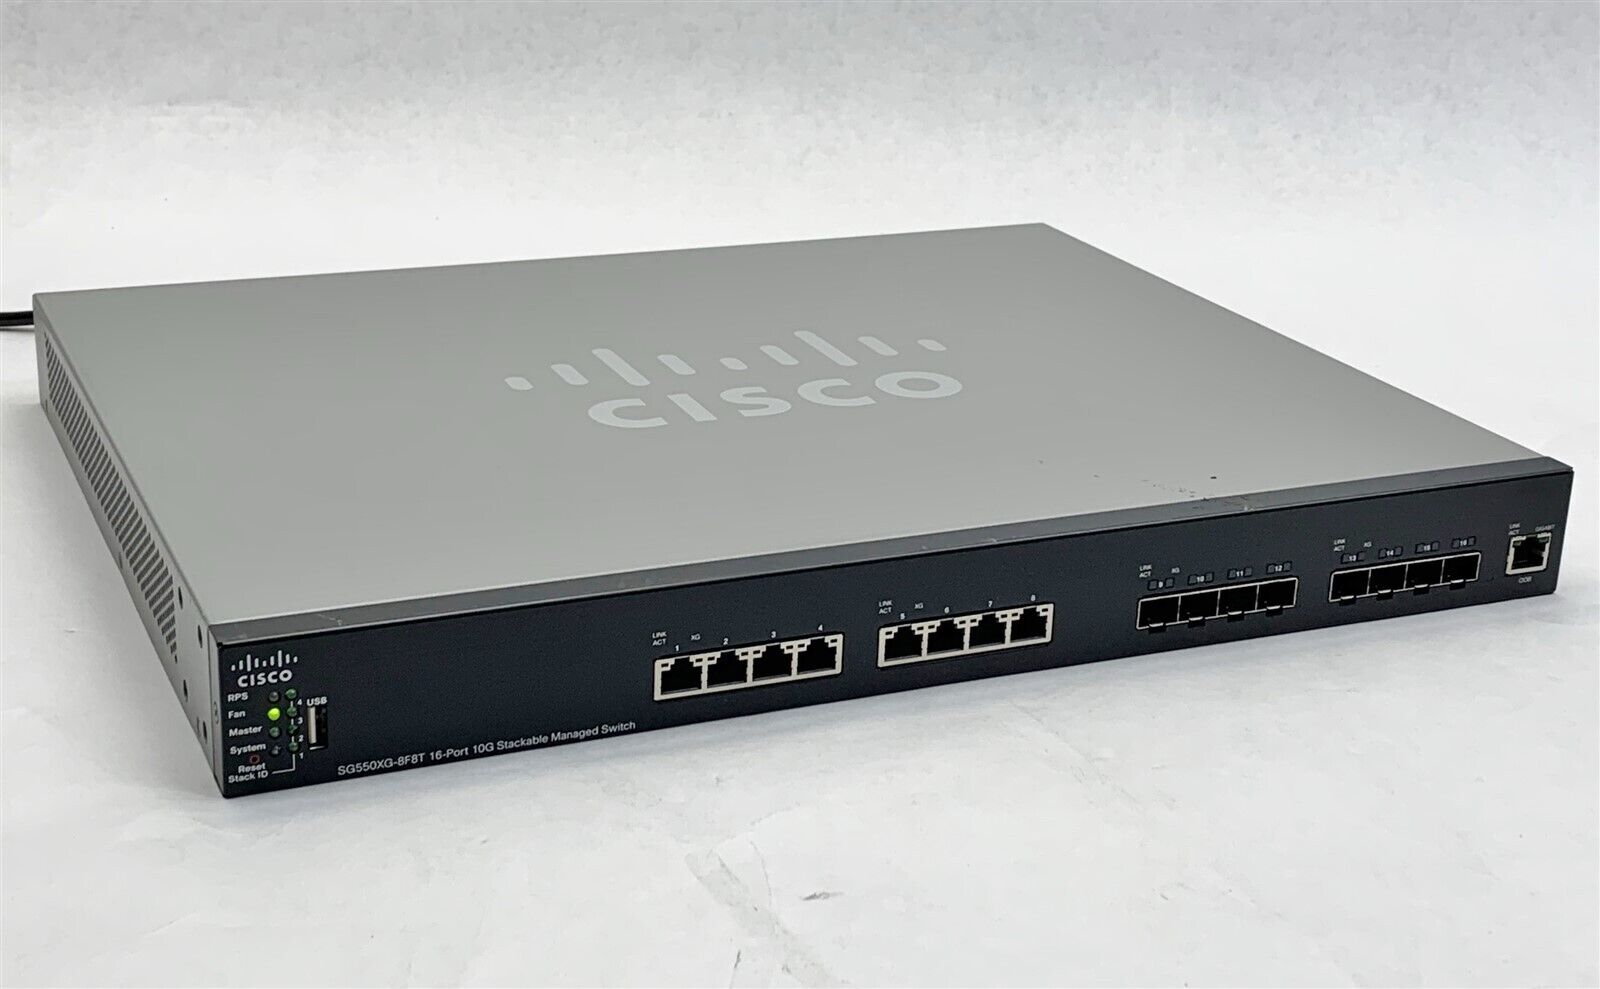 Cisco SG550XG-8F8T-K9 16-Port 10G Stackable Managed Gigabit Network Switch